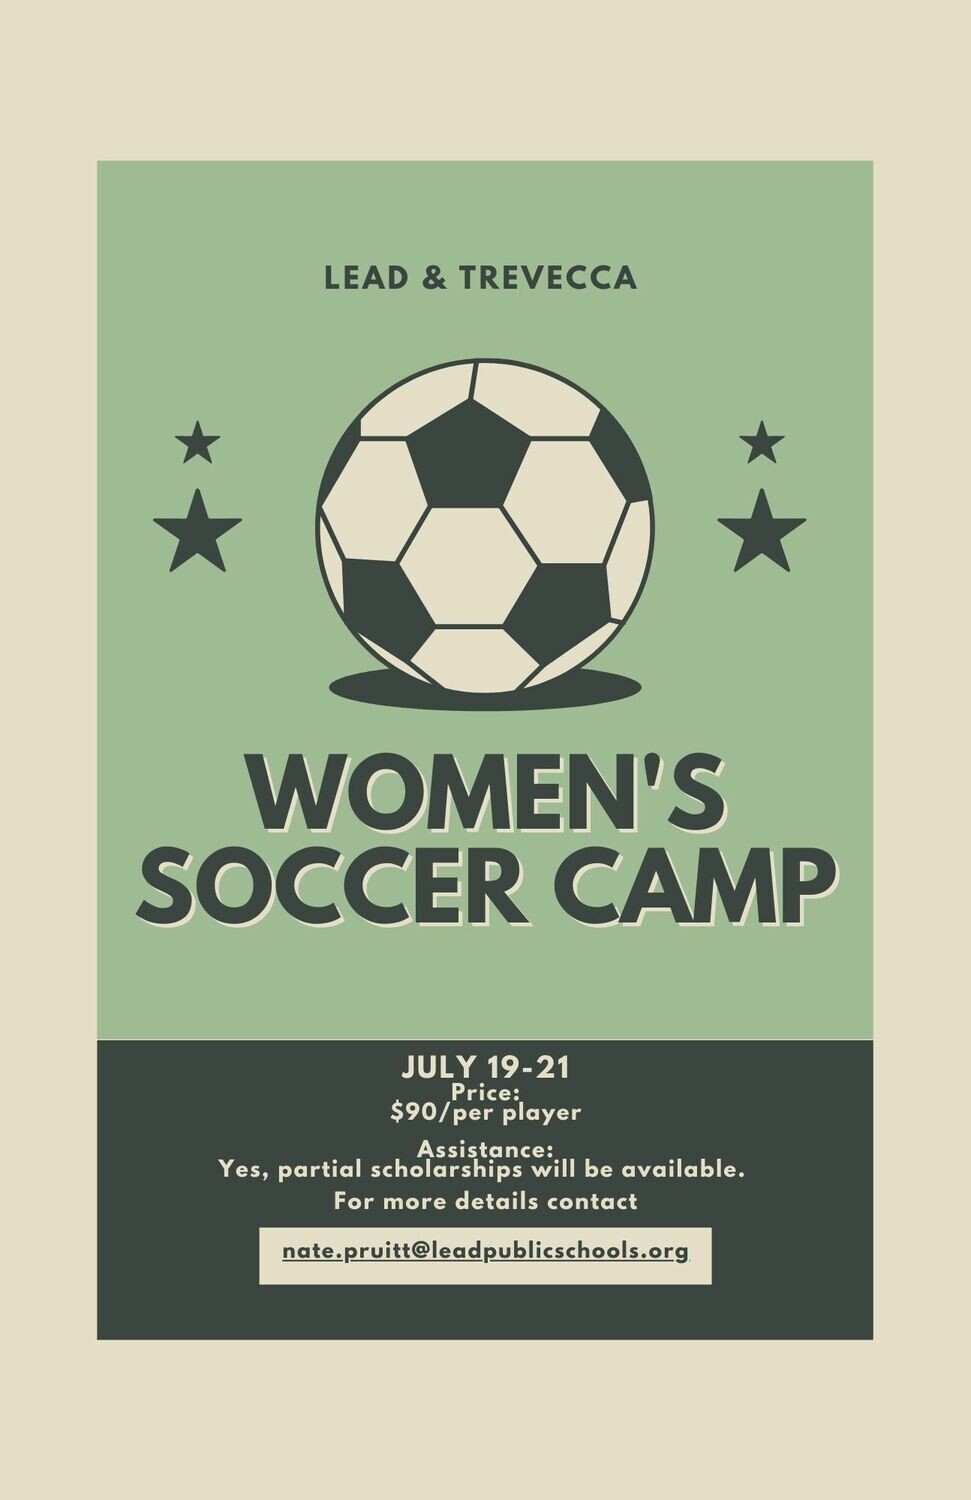 Women's Soccer Summer Camp (LEAD & Trevecca)